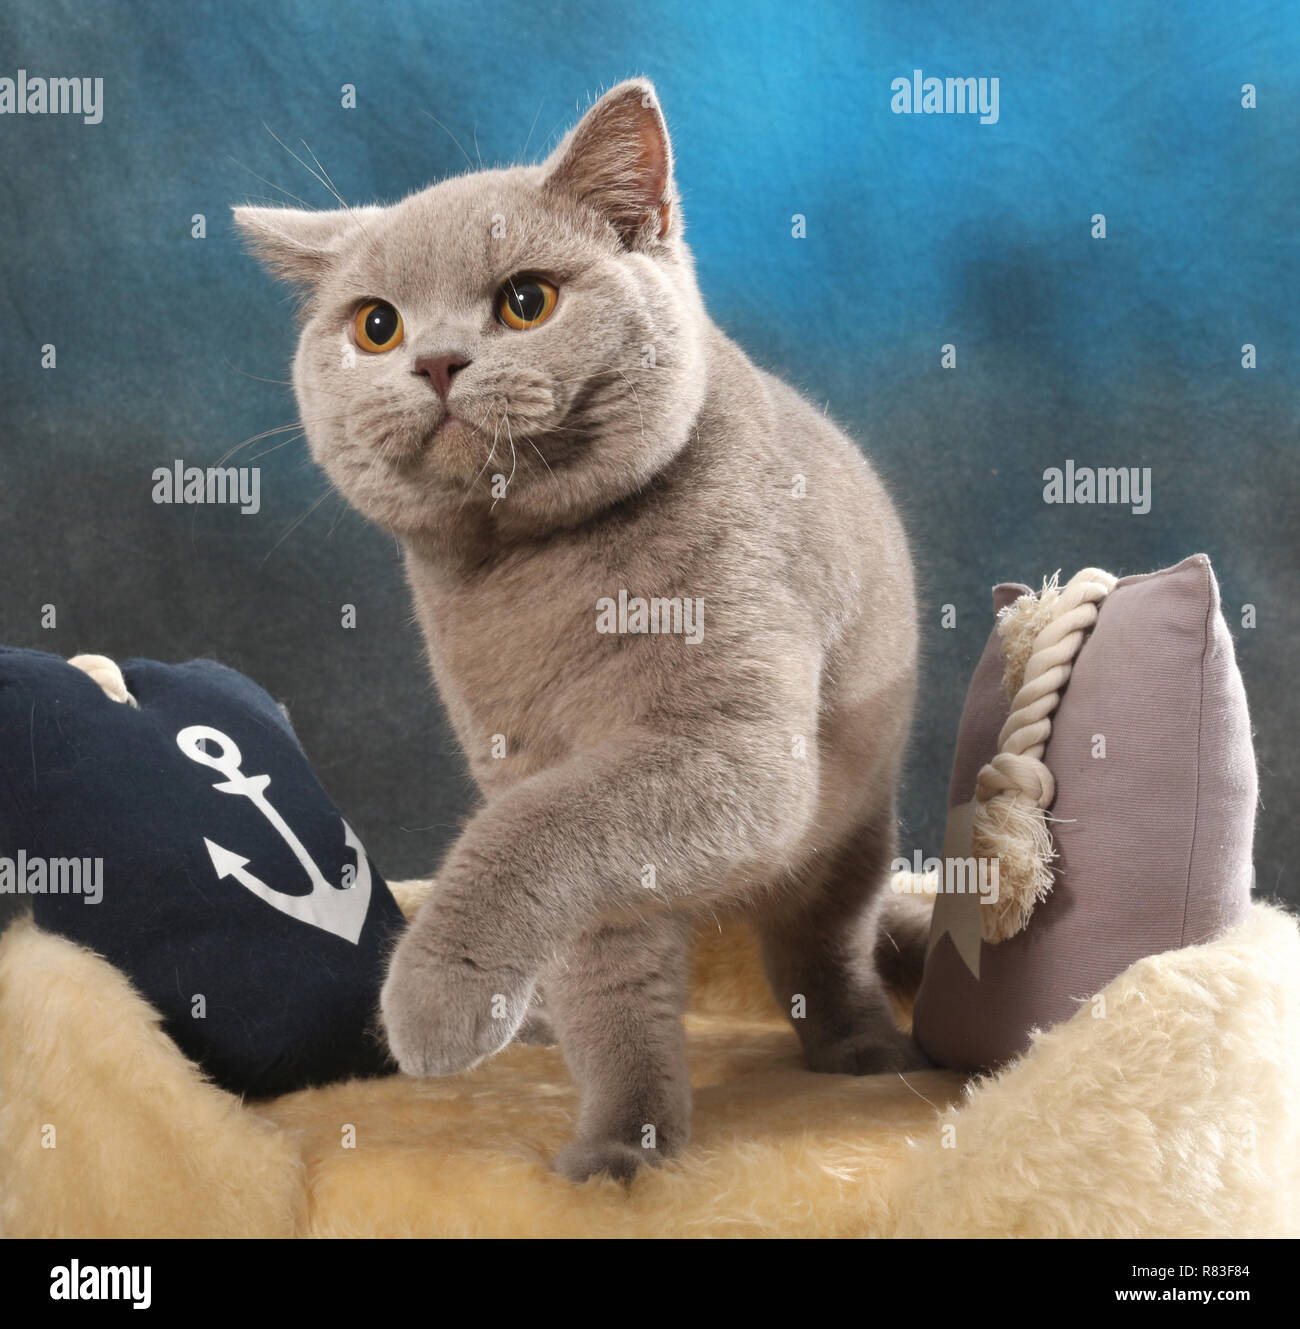 british shorthair cat, lilac, sitting between pillows Stock Photo